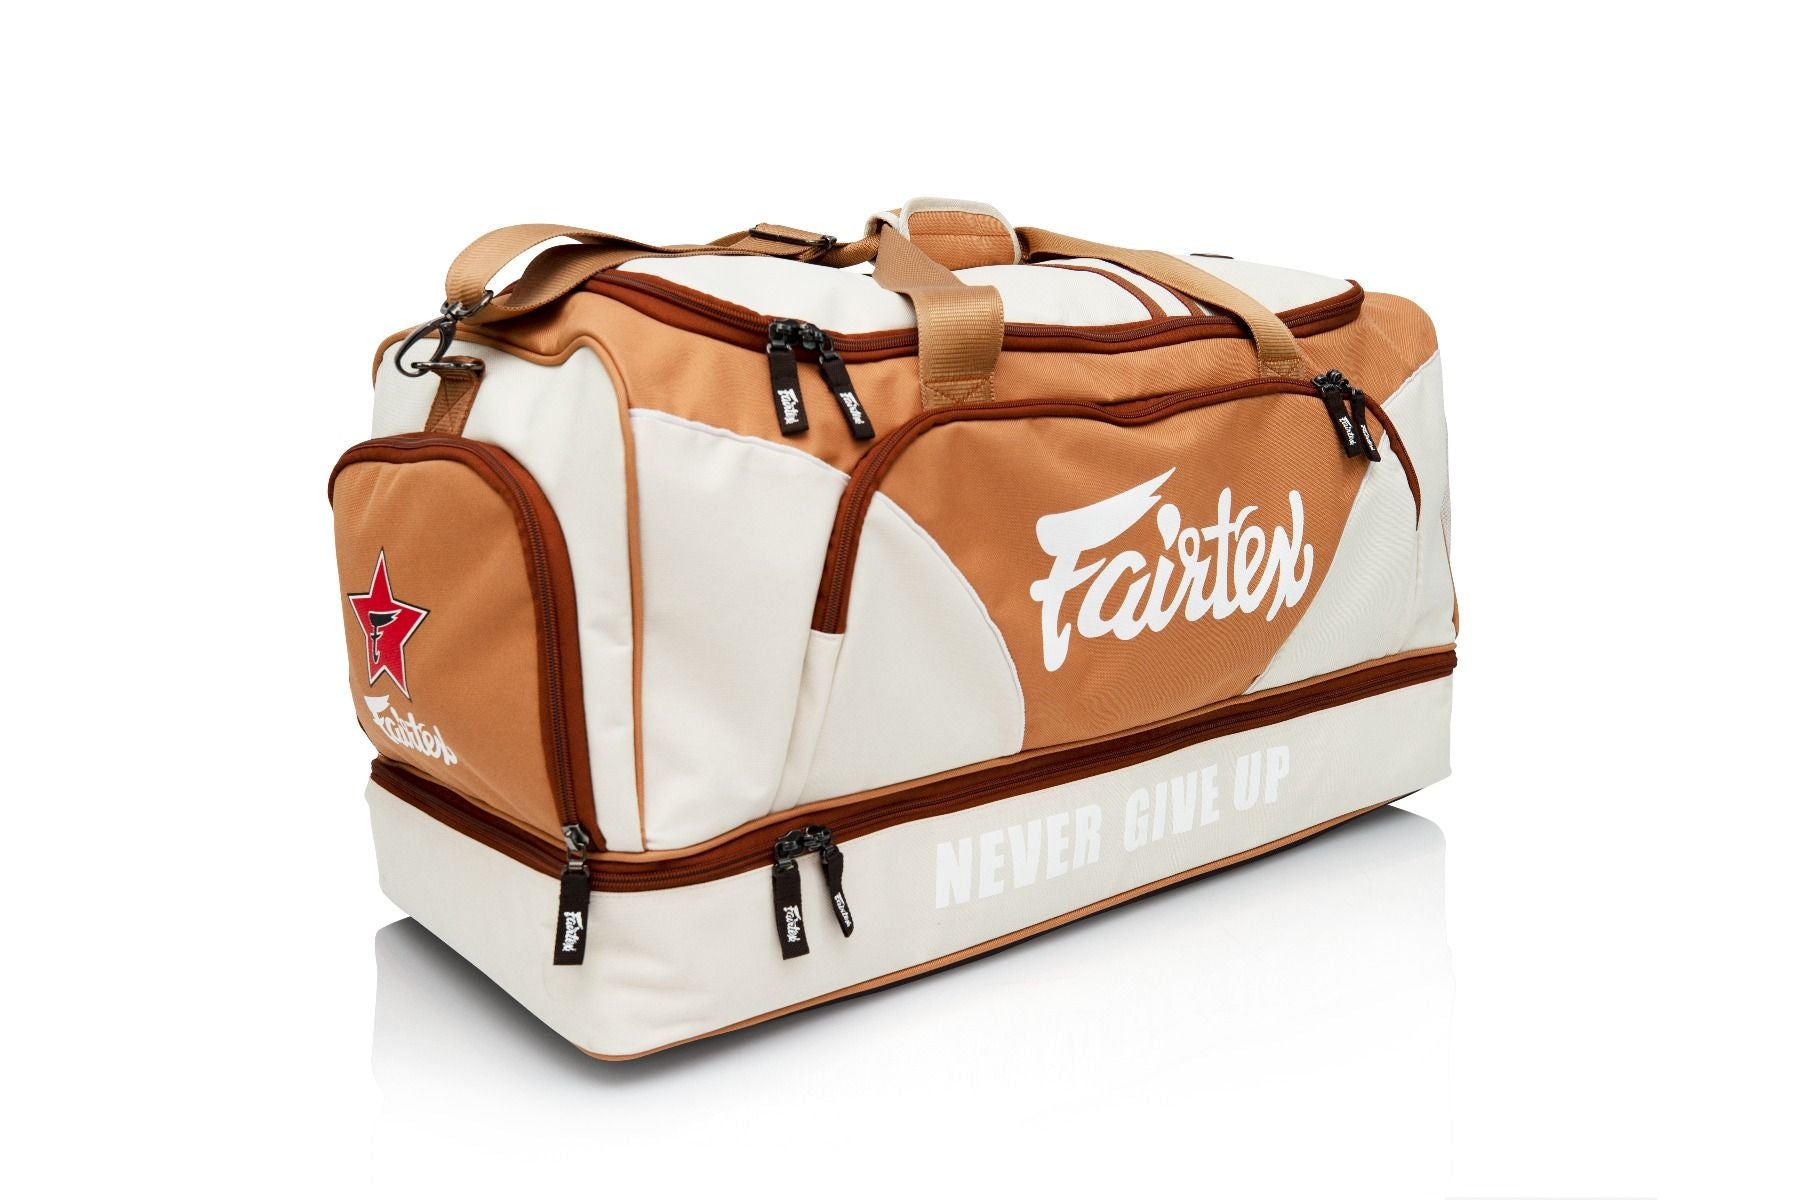 Fairtex Gym Bag (BAG2)